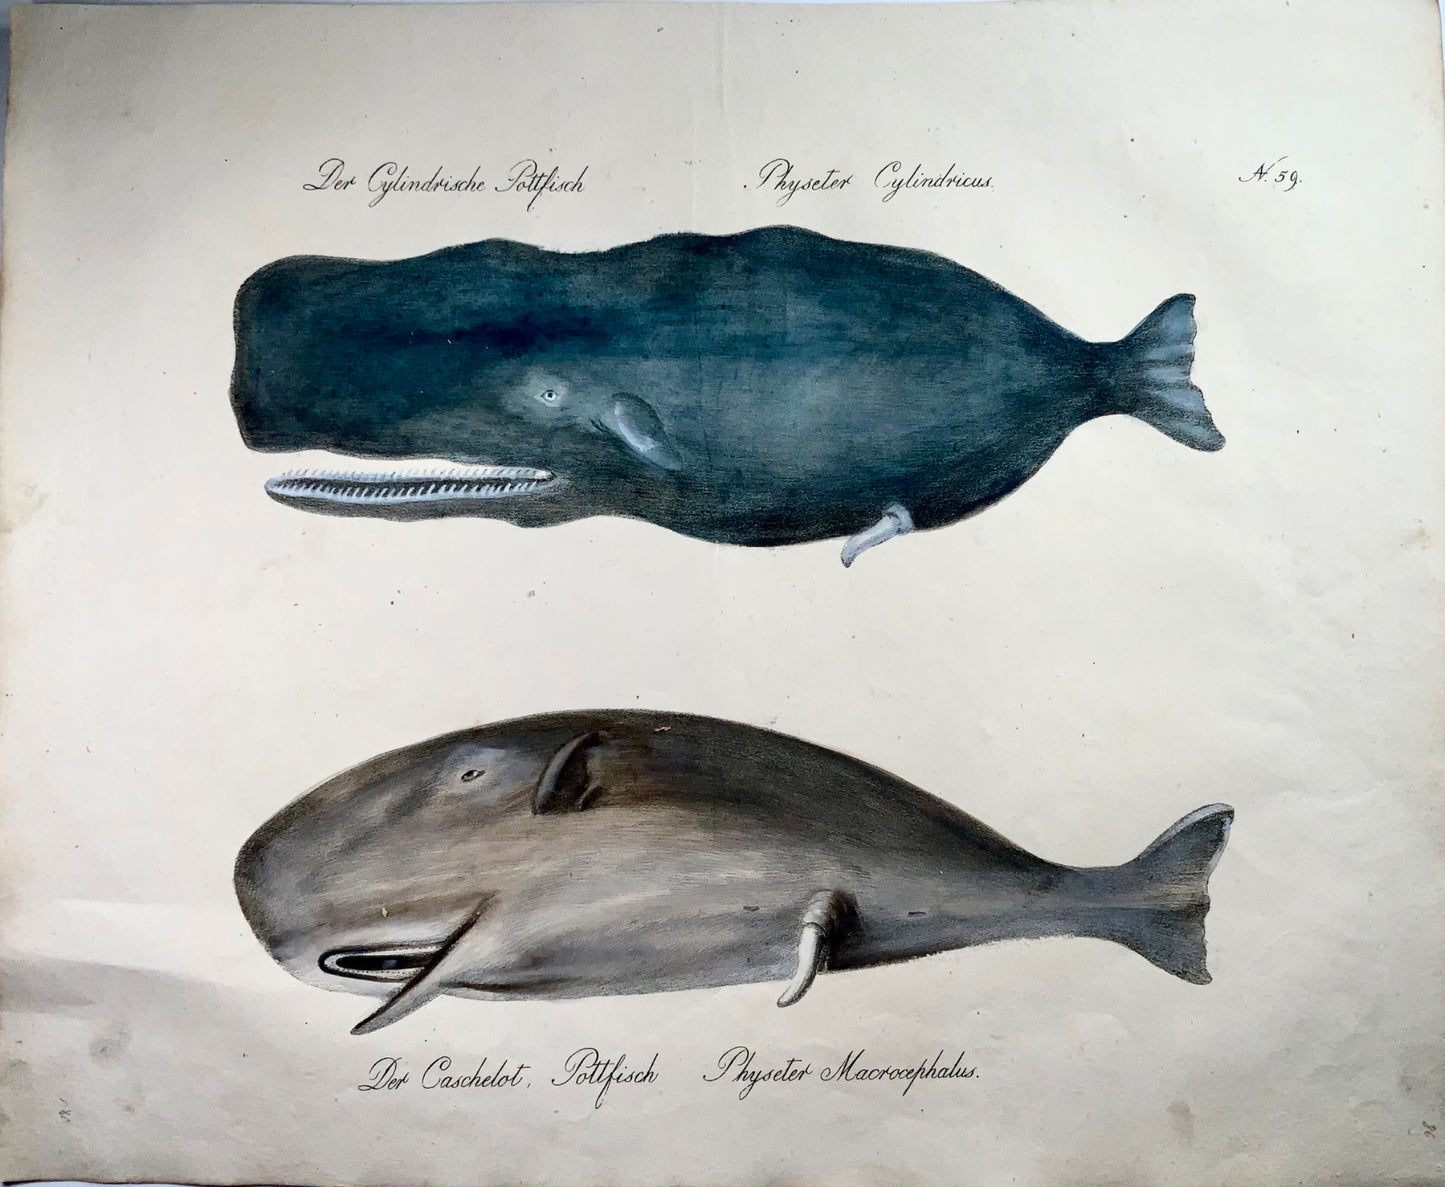 1816 Sperm whales, Brodtmann, Imp. folio 42.5 cm, incunabula of lithography